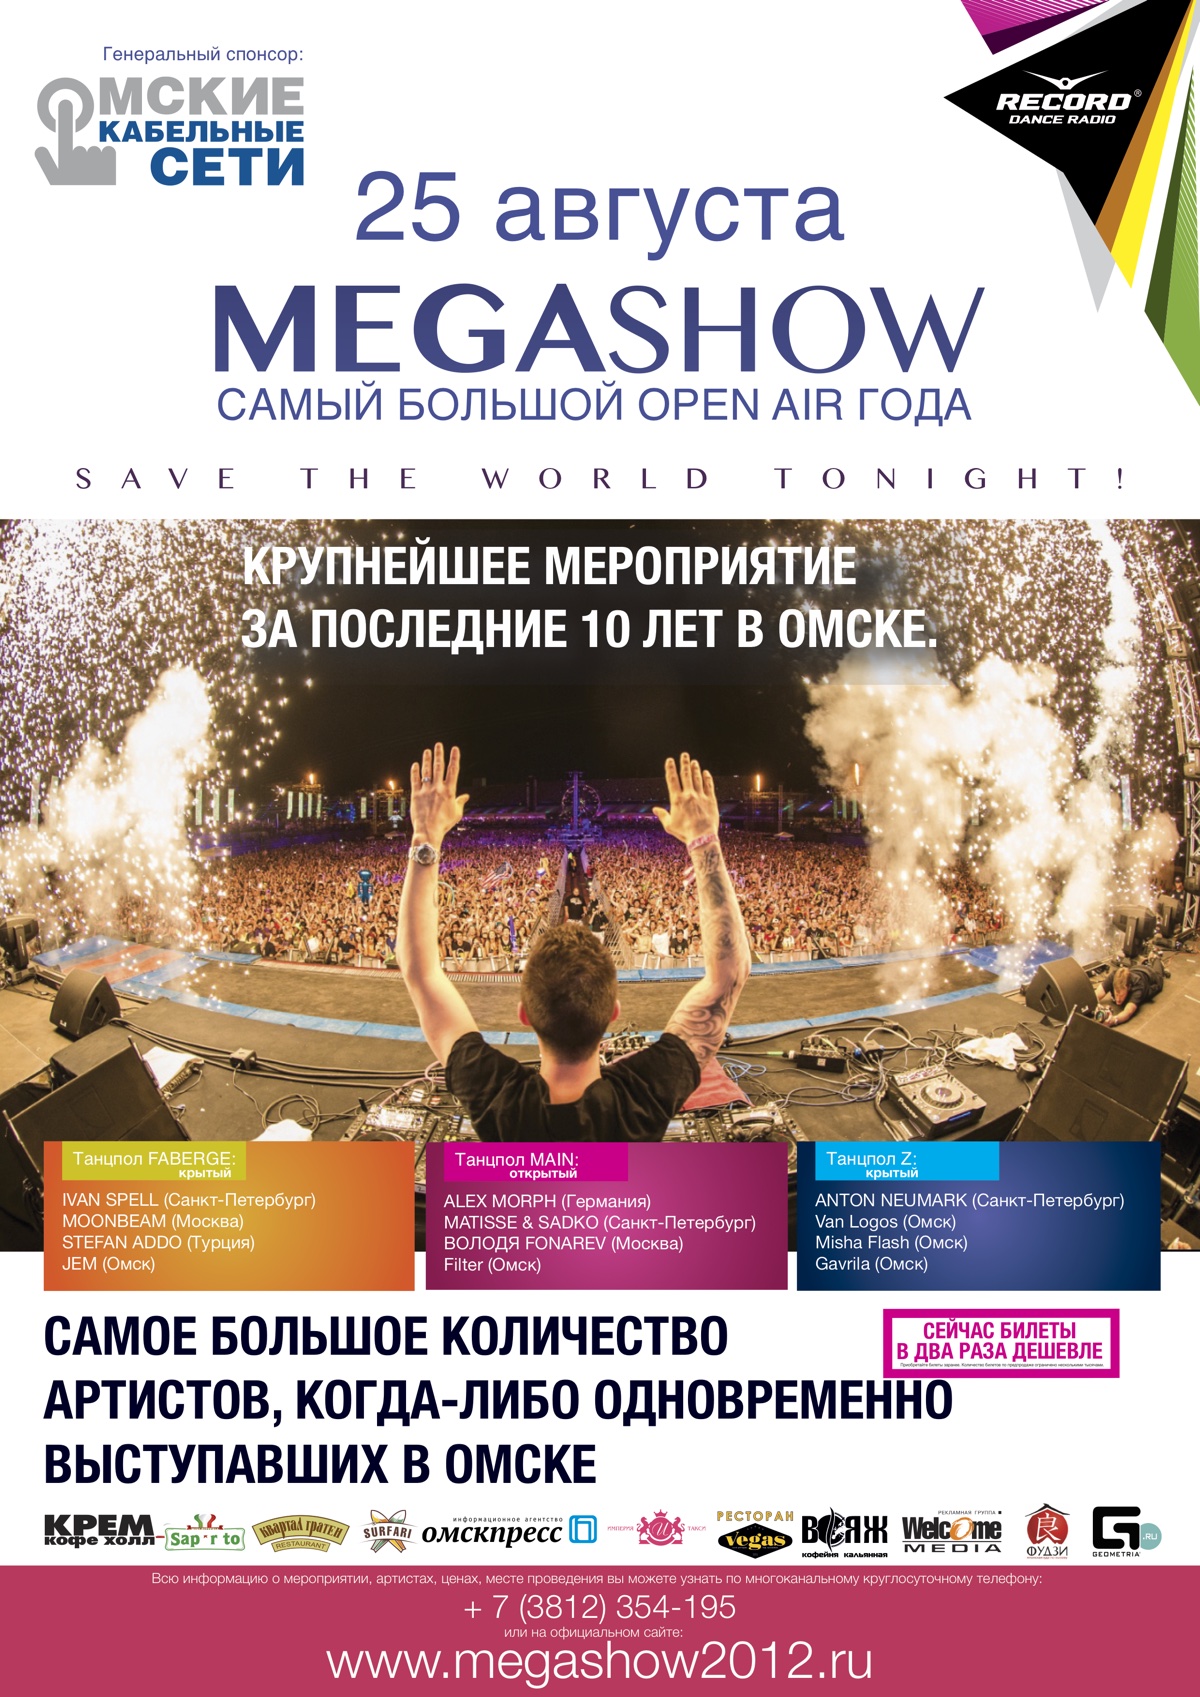 Megashow 2012 самый большой open air года 25 августа 2012 Omsk Омск Олег Борисов Oleg Borisov Москва Moscow